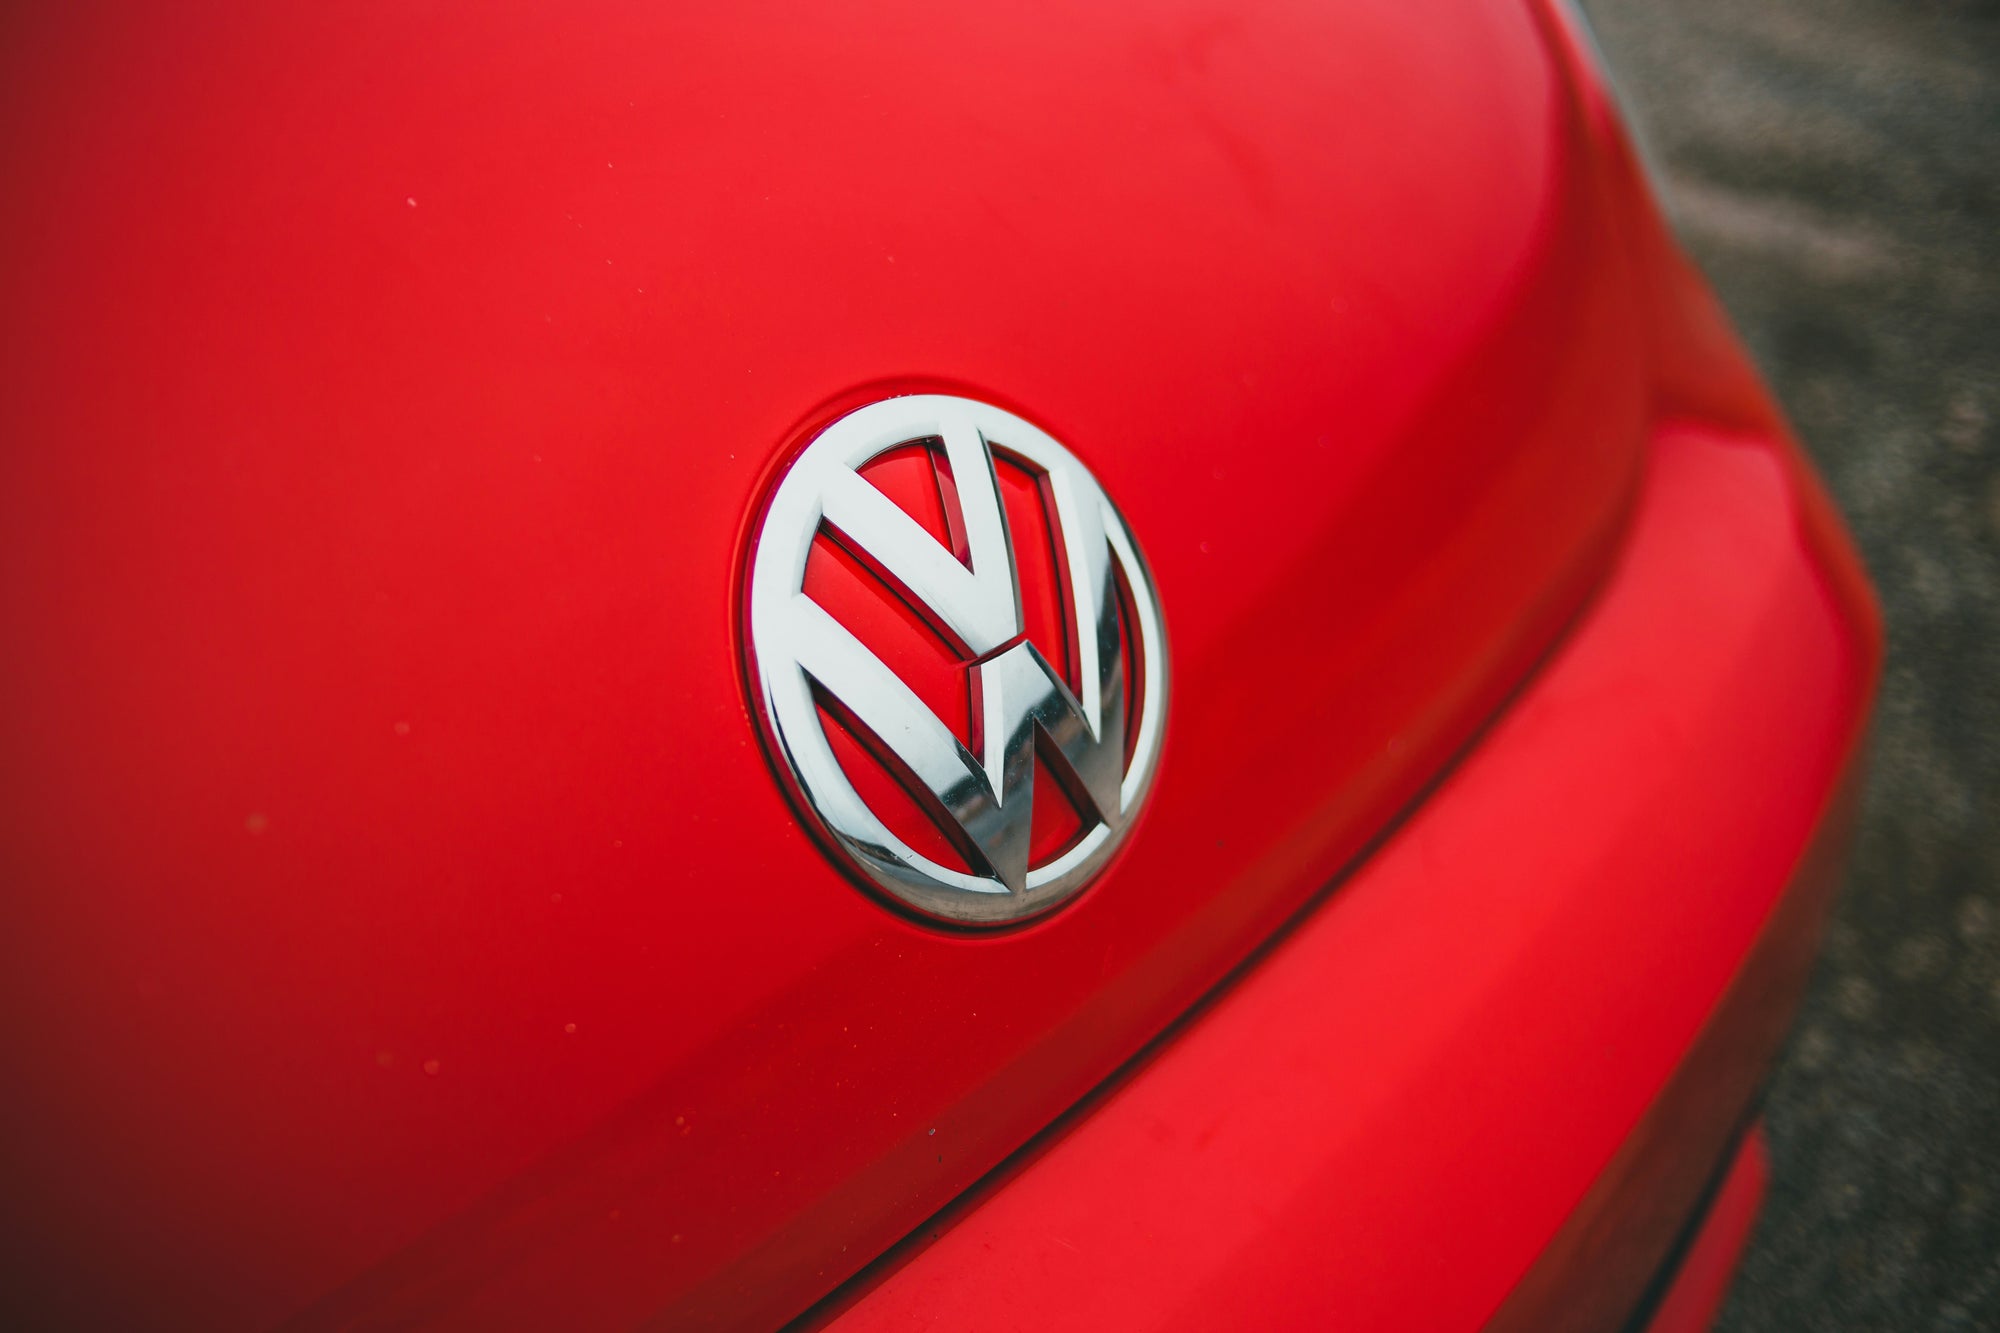 VW Ceramic Coating: Is It Worth It?